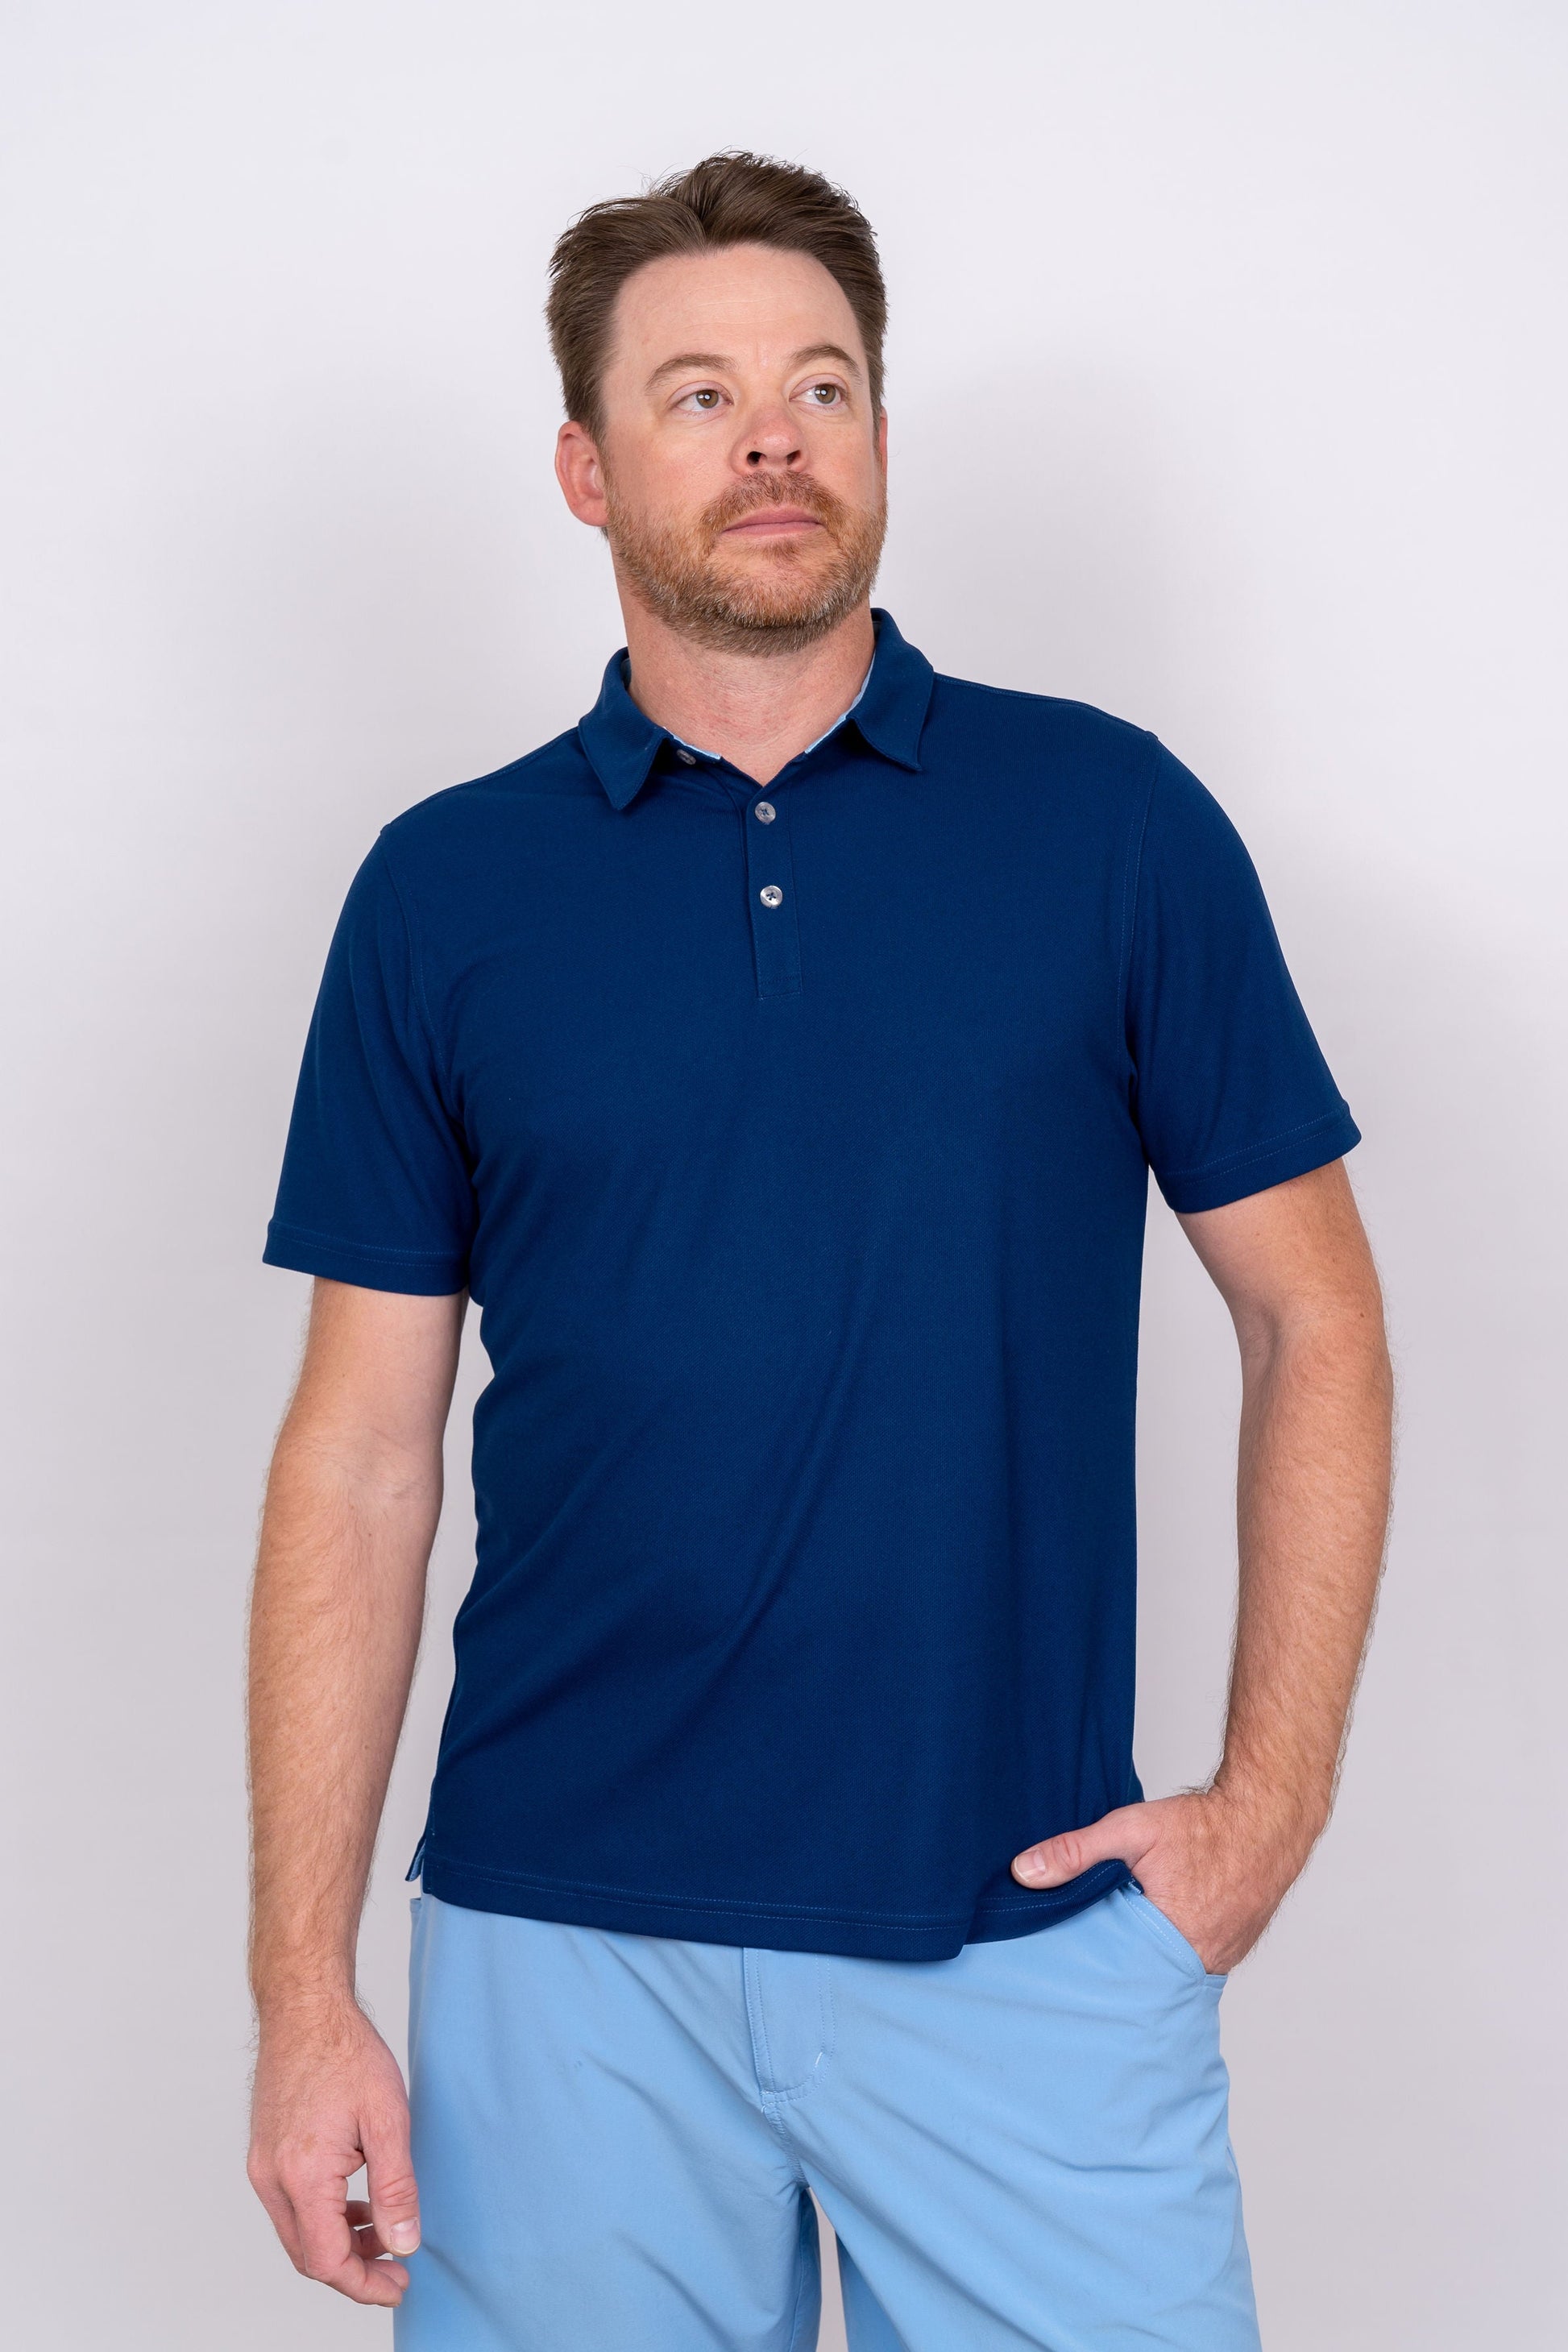 Weekend Polo - Navy/Carolina Blue Men's Golf Shirt Taylor Jordan Apparel Navy Small 